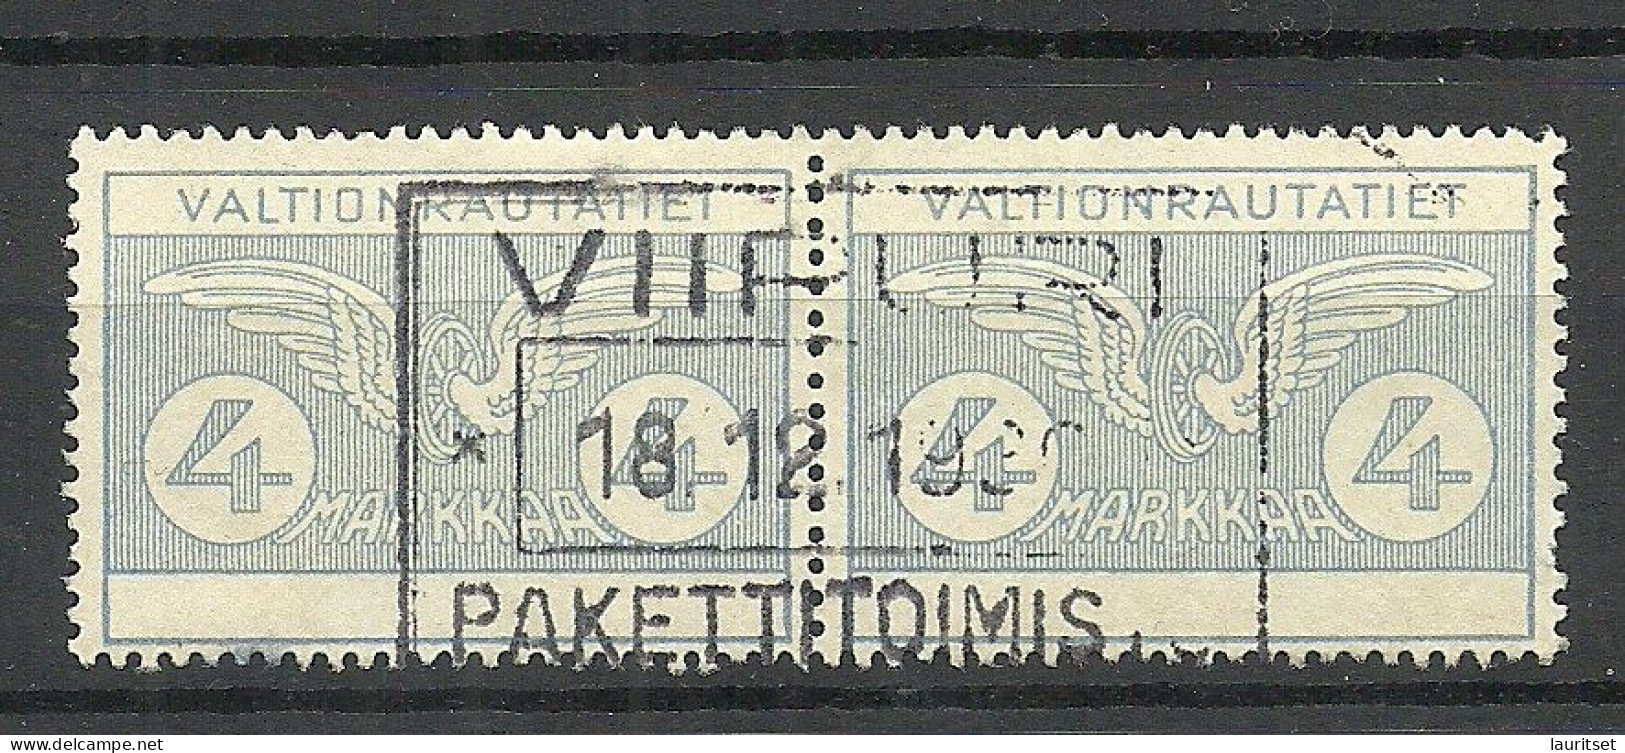 FINLAND FINNLAND 1930ies O Viipuri Railway Stamp 4 MK As Pair - Paketmarken